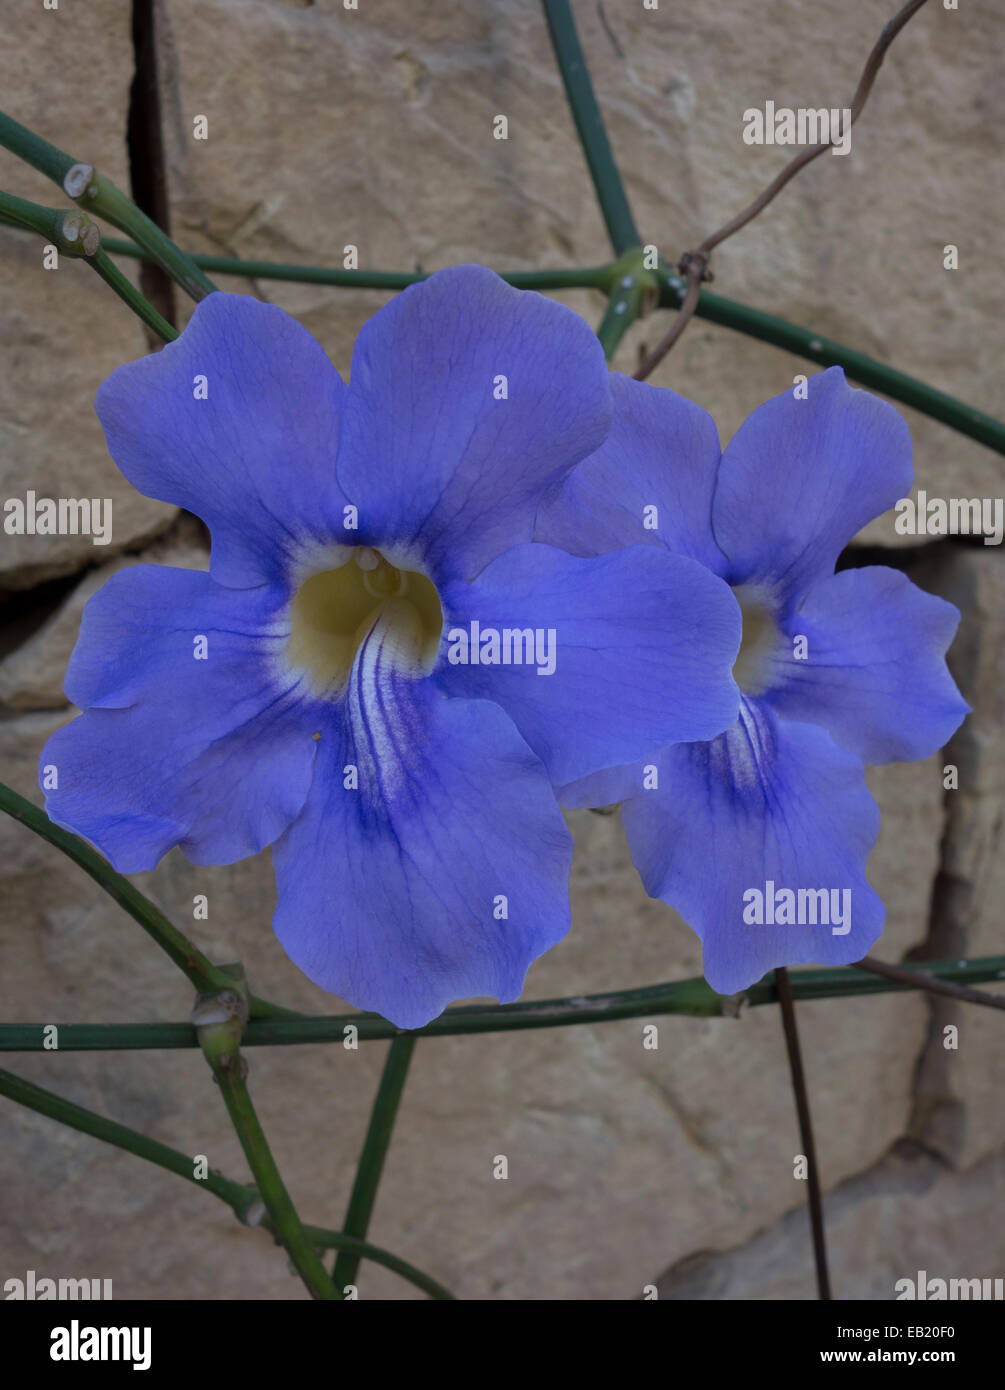 Blue flower from the Mediterranean, Malta. Stock Photo